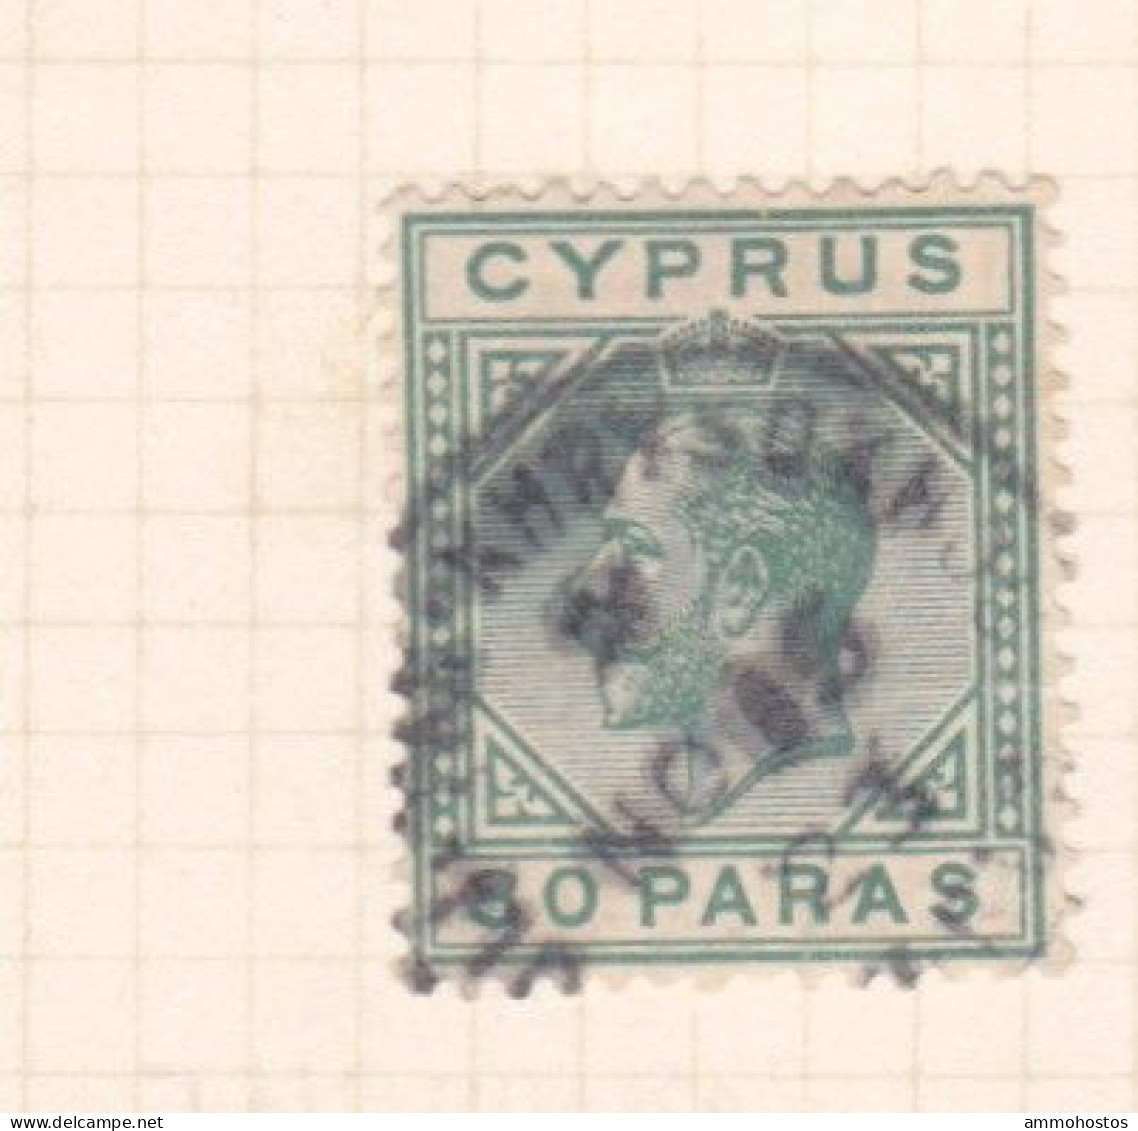 CYPRUS KGV POLIS TIS KHRYSOKHOUS SINGLE CIRCLE RURAL POSTMARK - Cyprus (...-1960)